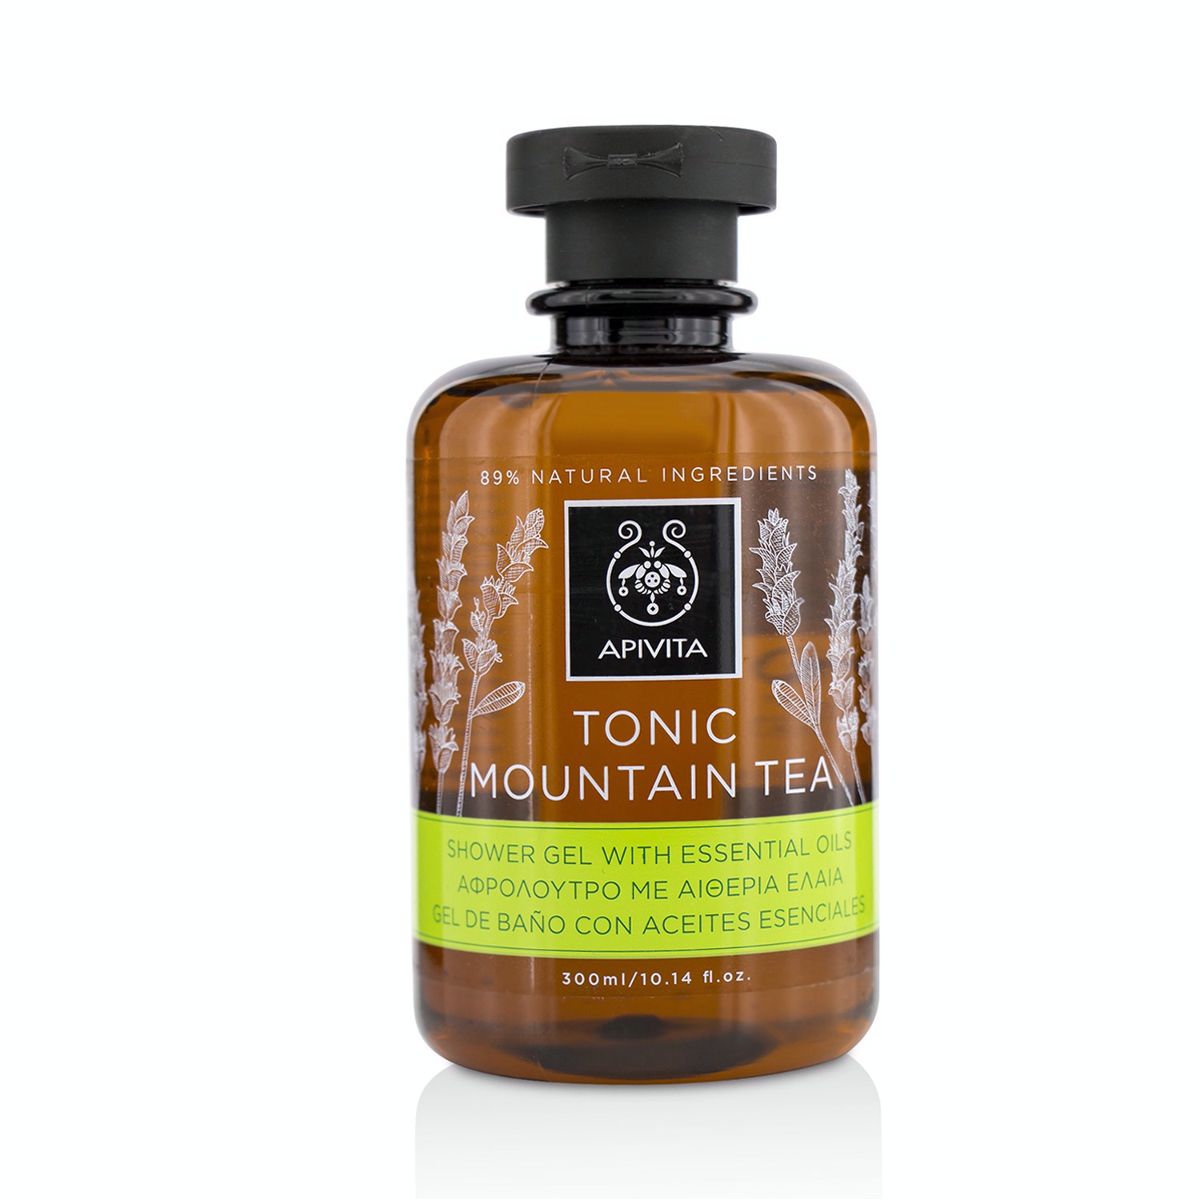 Tonic Mountain Tea Shower Gel with Essential Oils Apivita Image